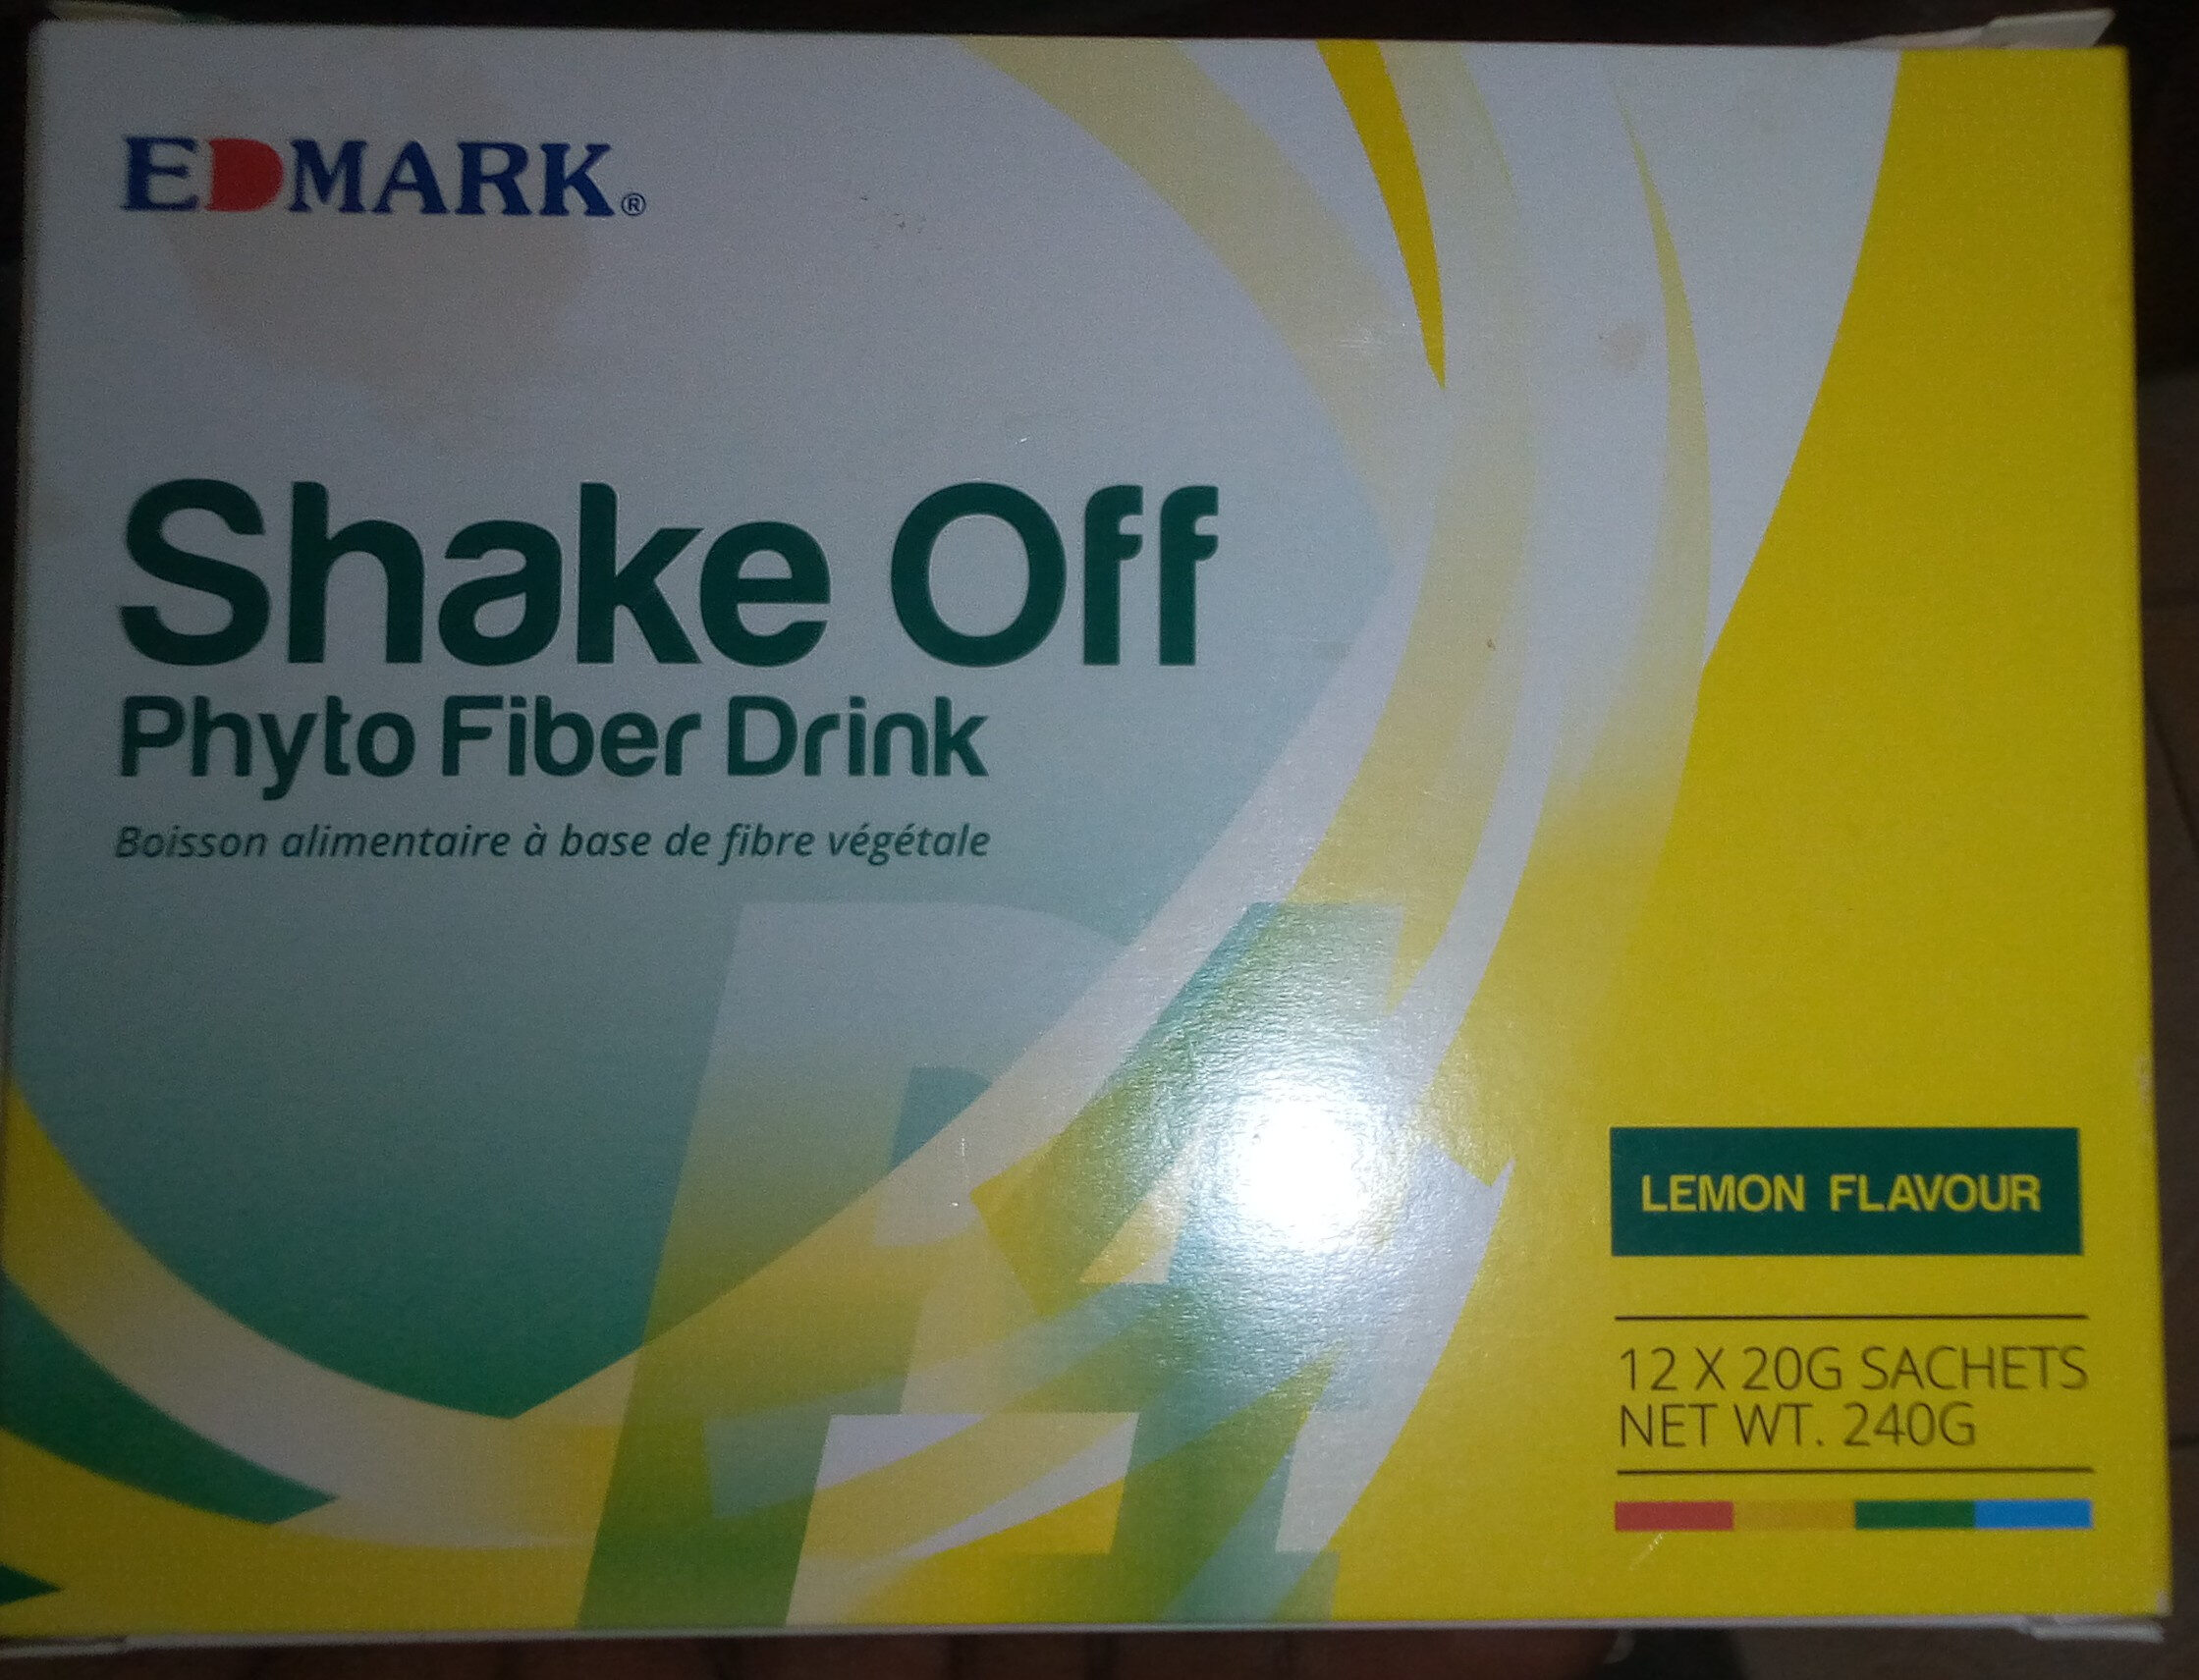 Shake Off Phyto Fiber Drink (Lemon Flavor) - Prodotto - en